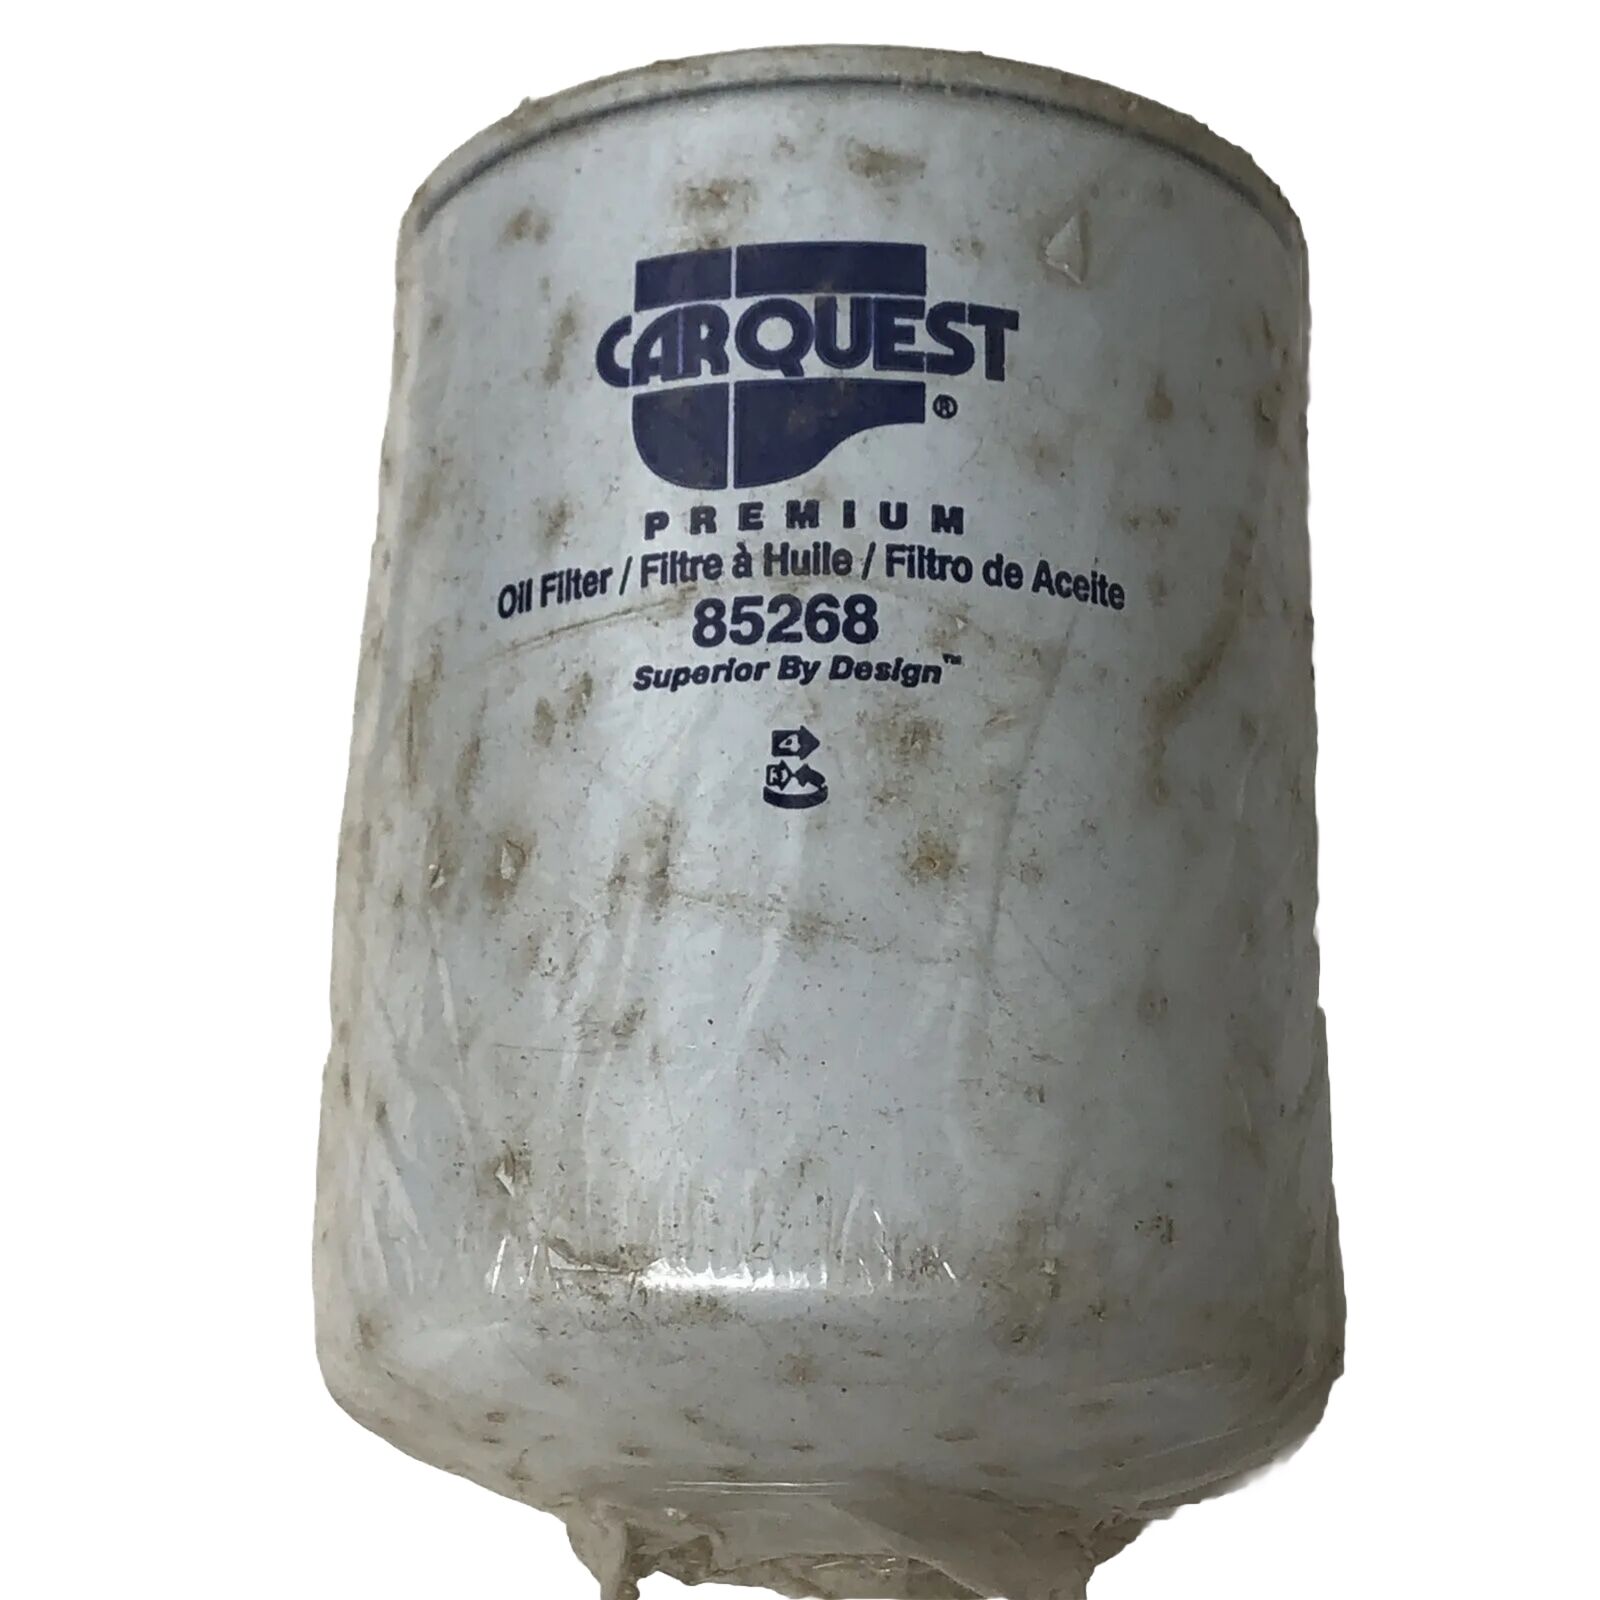 Carquest 85268 Oil Filter